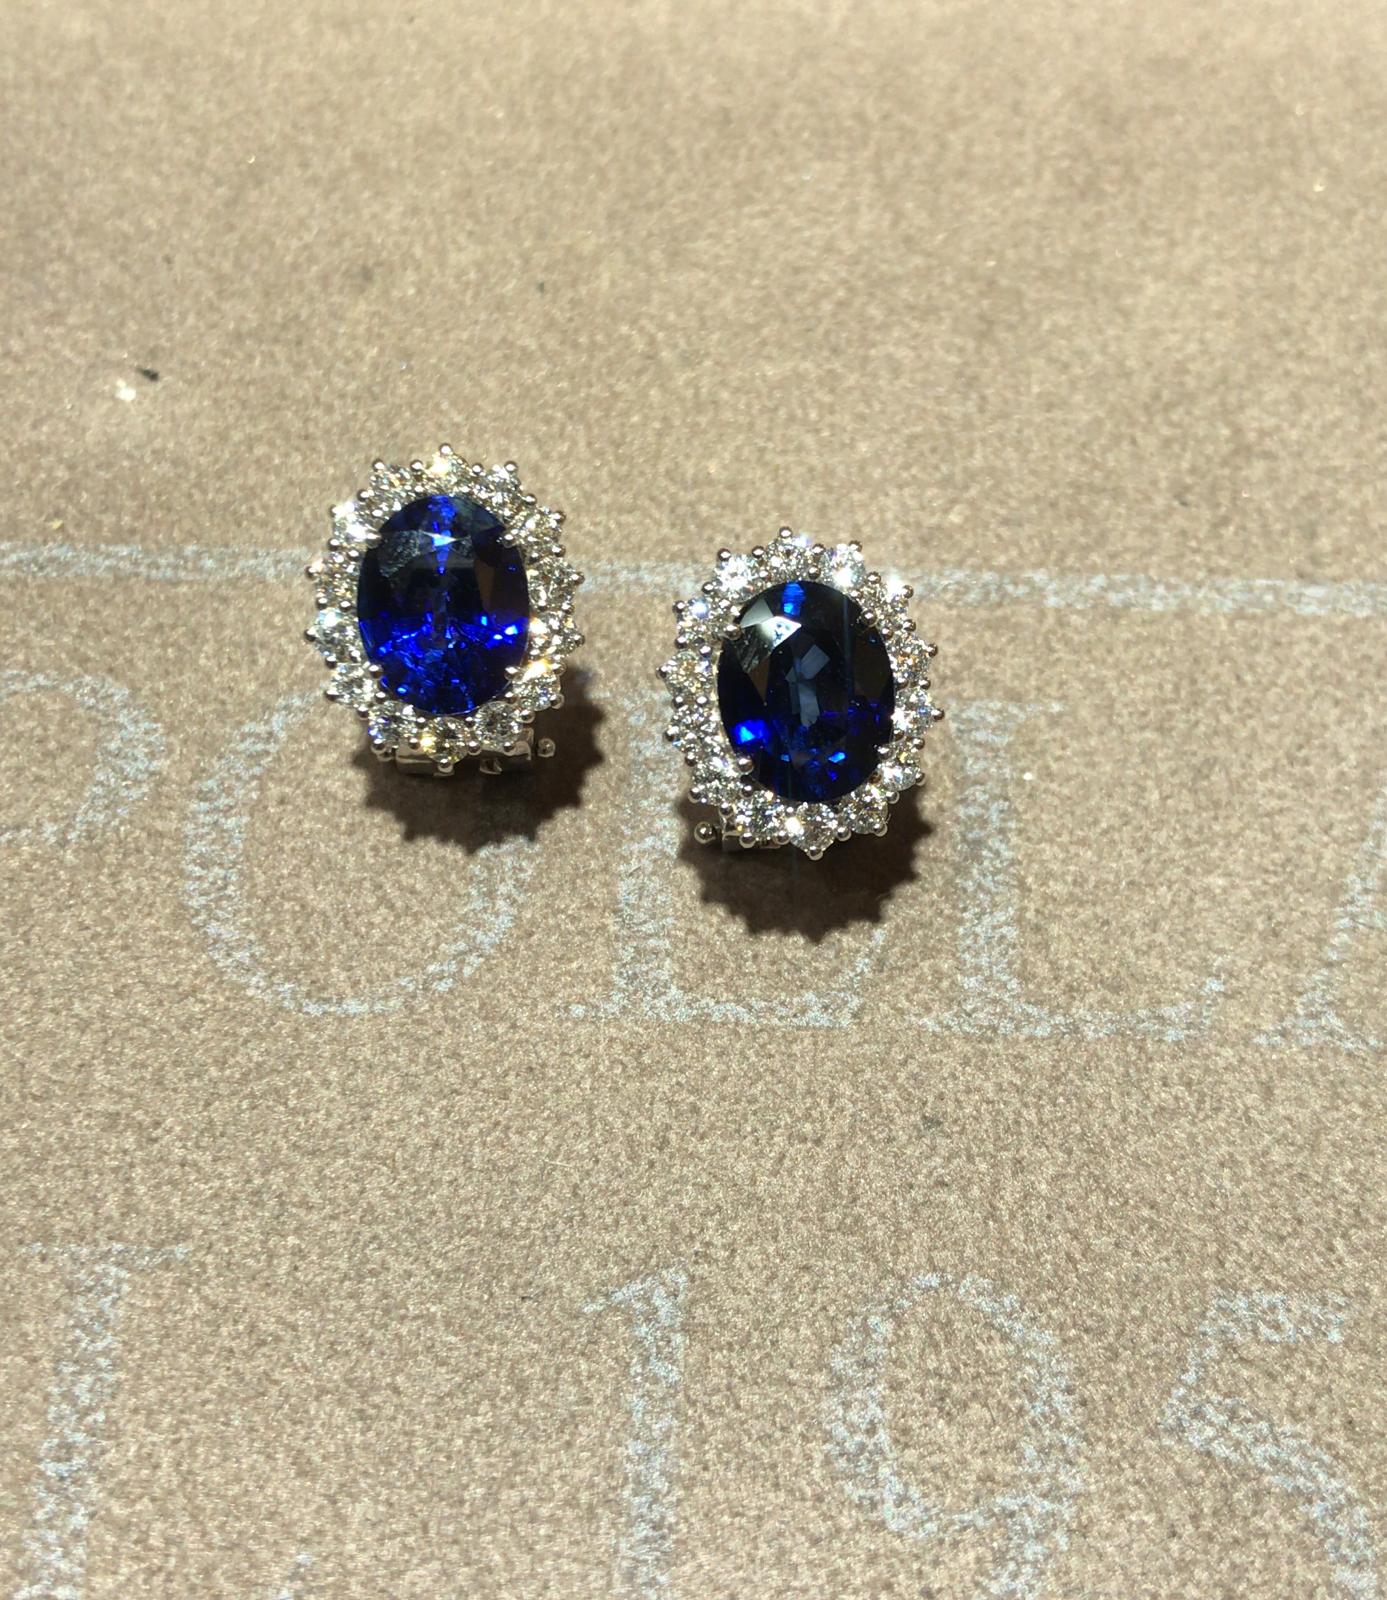 Blue sapphire earrings in 750% white gold